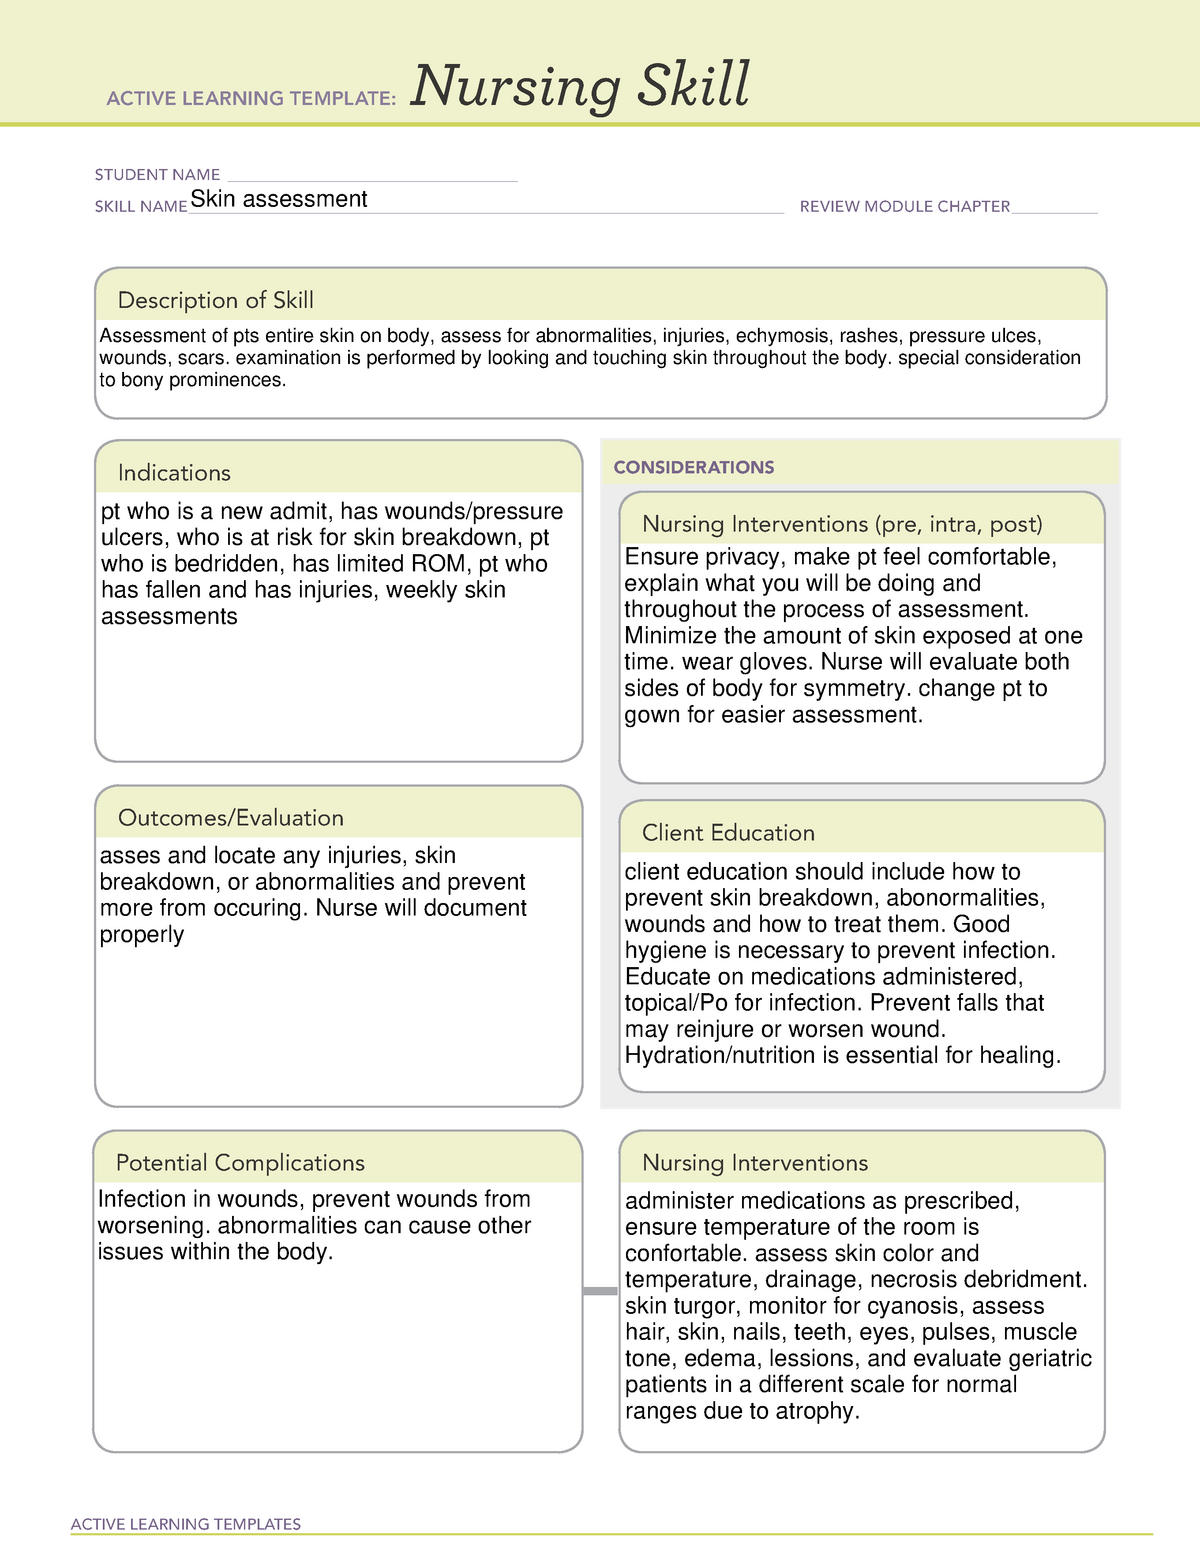 nursing-skill-skin-assesment-uti-active-learning-templates-nursing